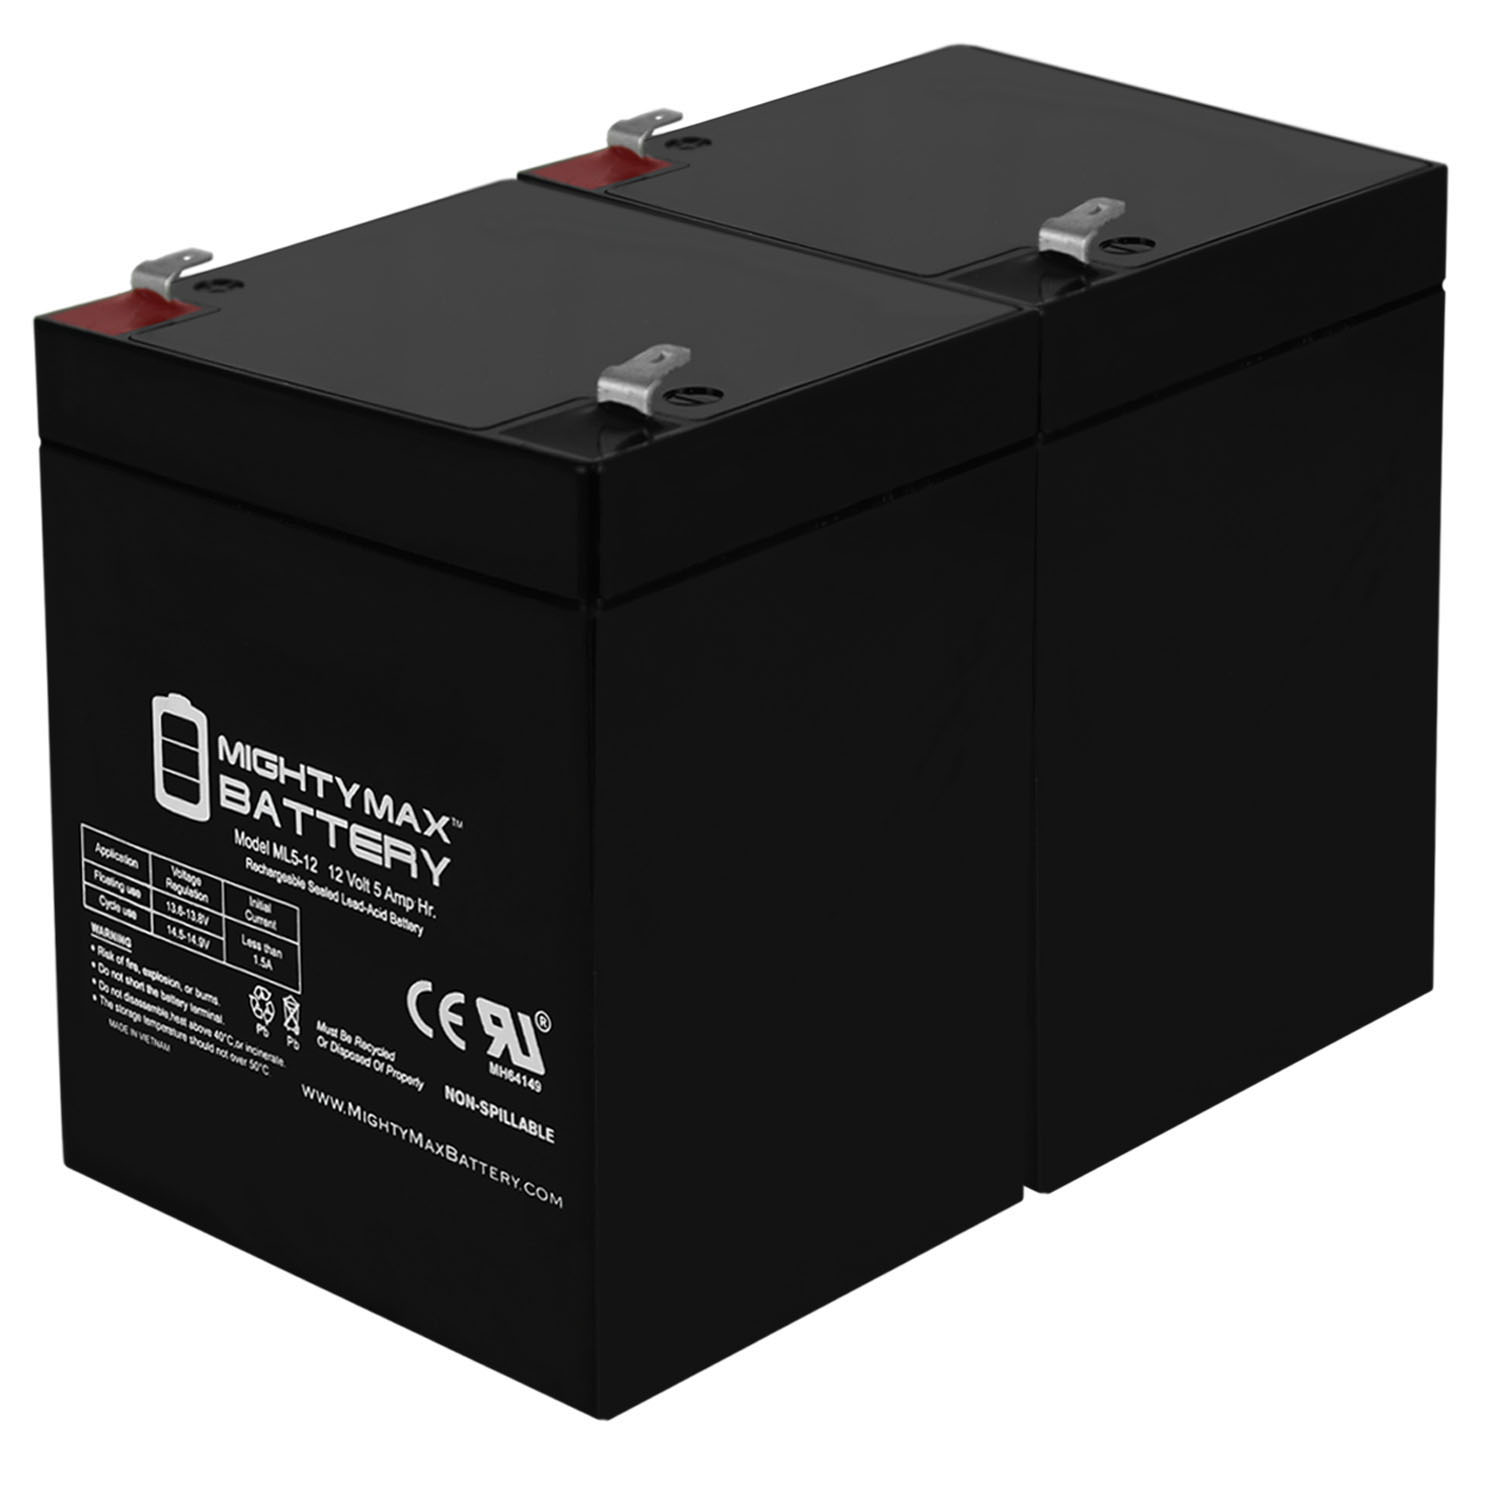 12V 5AH SLA Replacement Battery for Ditek DTK-BU600PLUS - 2 Pack